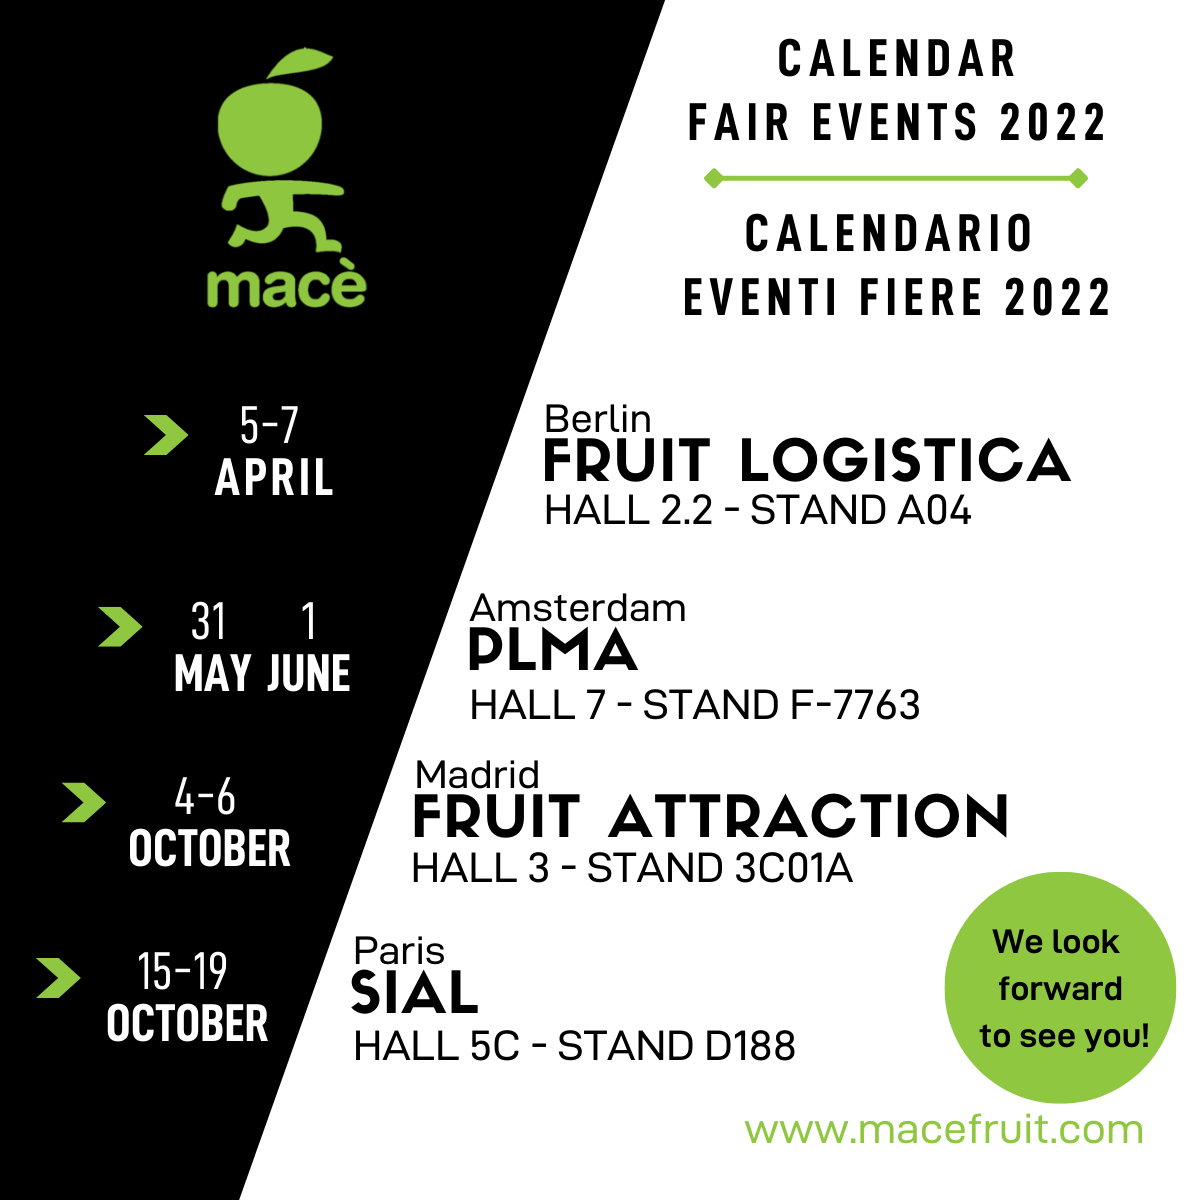 calendario fiere 2022 a cui Macè partecipa: fruit logistica 5-7 aprile,  PLMA 31 maggio 1 giugno, fruit attraction 4-6 ottobre, SIAL 15-19 ottobre